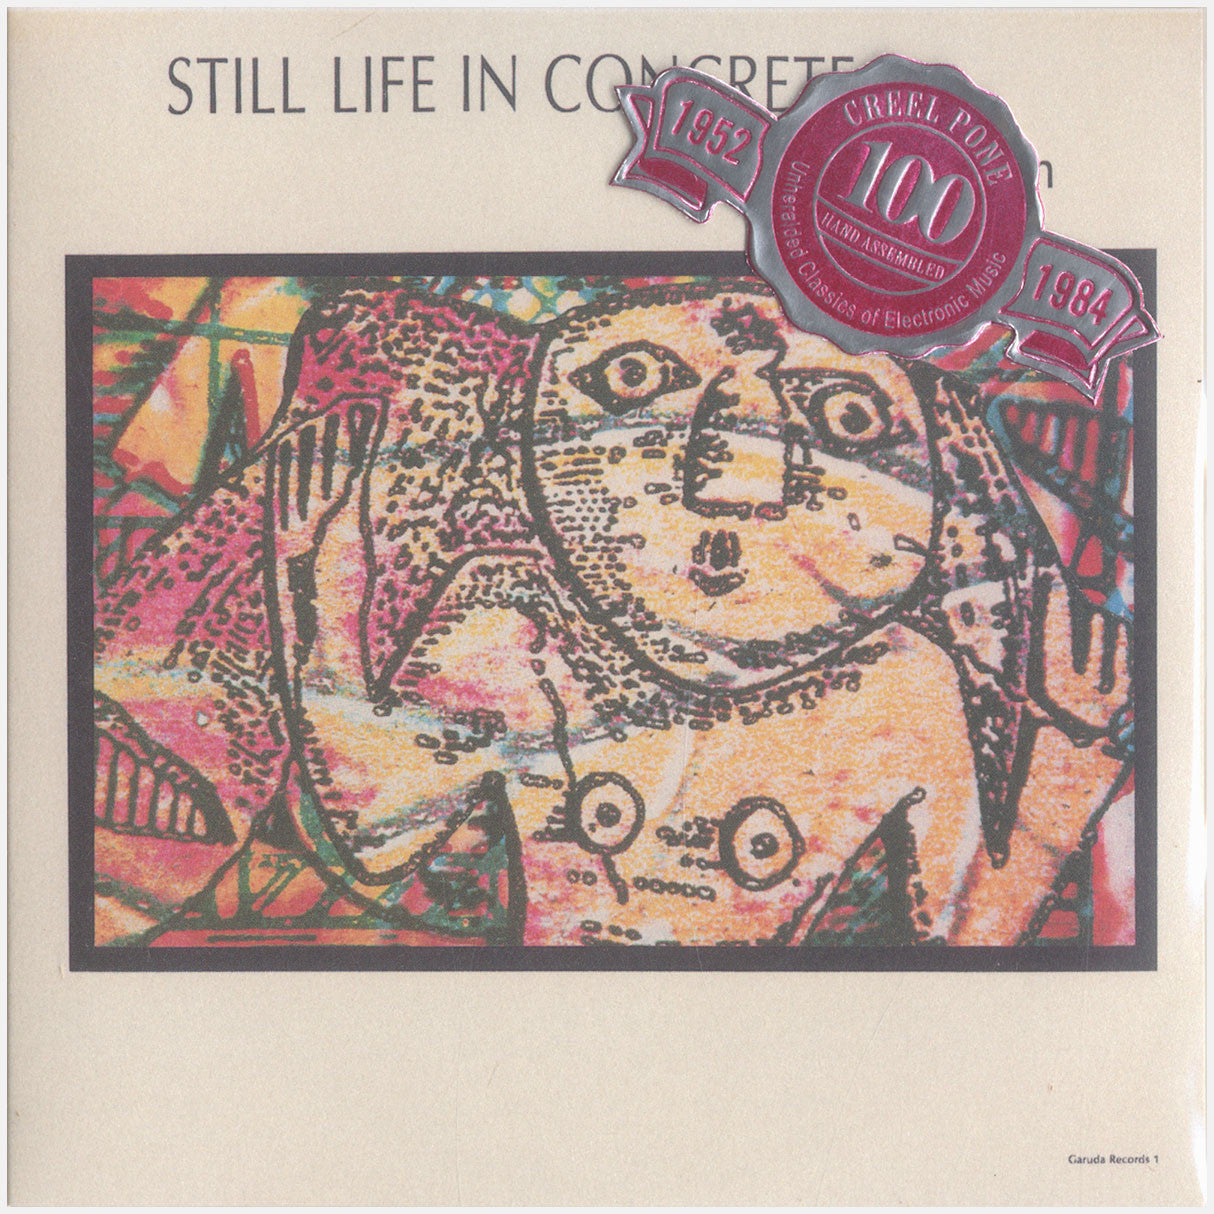 [CP 154 CD] Ed Herrmann; Still Life in Concrete